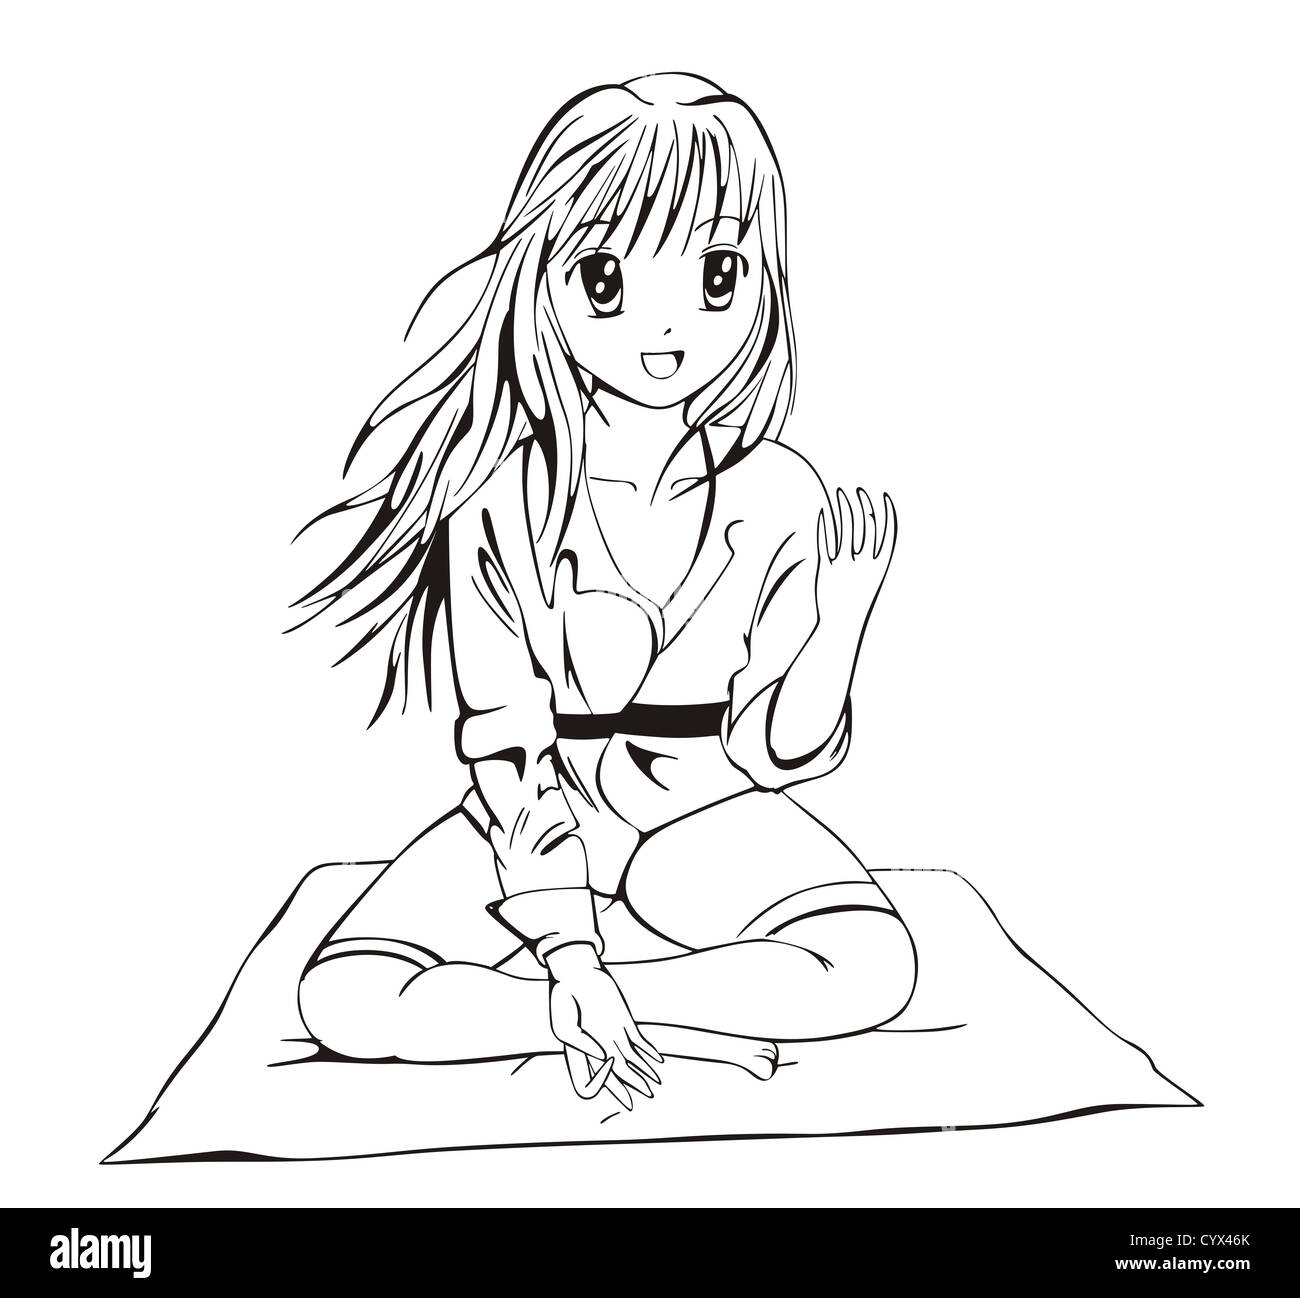 Anime-Wushu-Mädchen. Schwarz / Weiß-Vektor-Illustration. Stockfoto